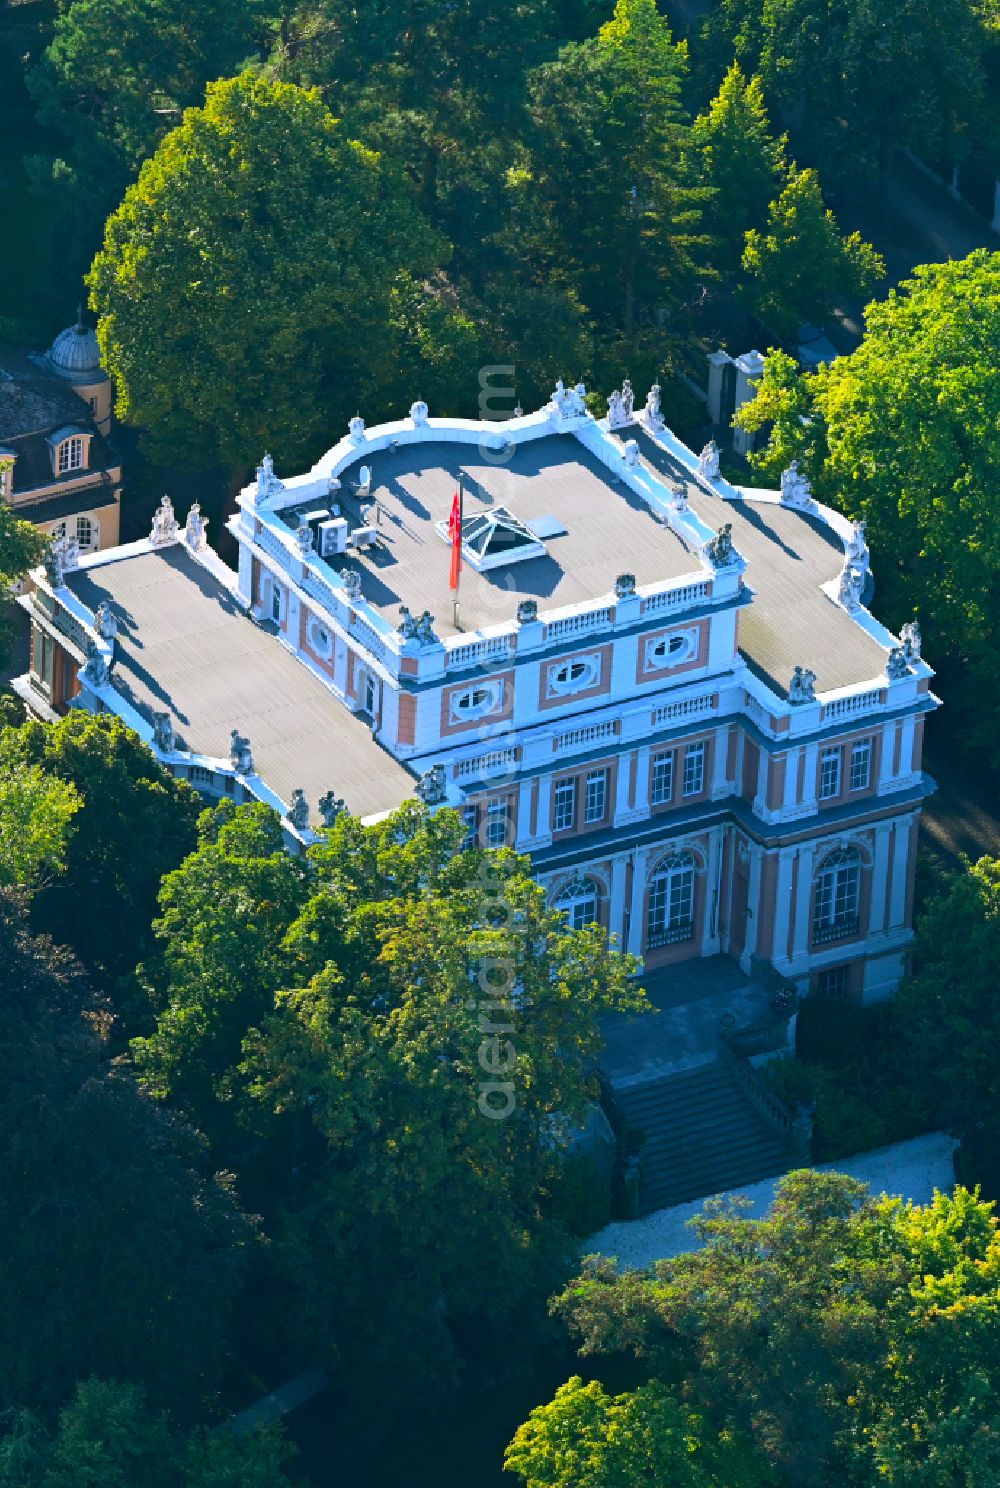 Aerial photograph Zeuthen - Palace of Dussmann Stiftung & Co. KG on street Havellandstrasse in Zeuthen in the state Brandenburg, Germany